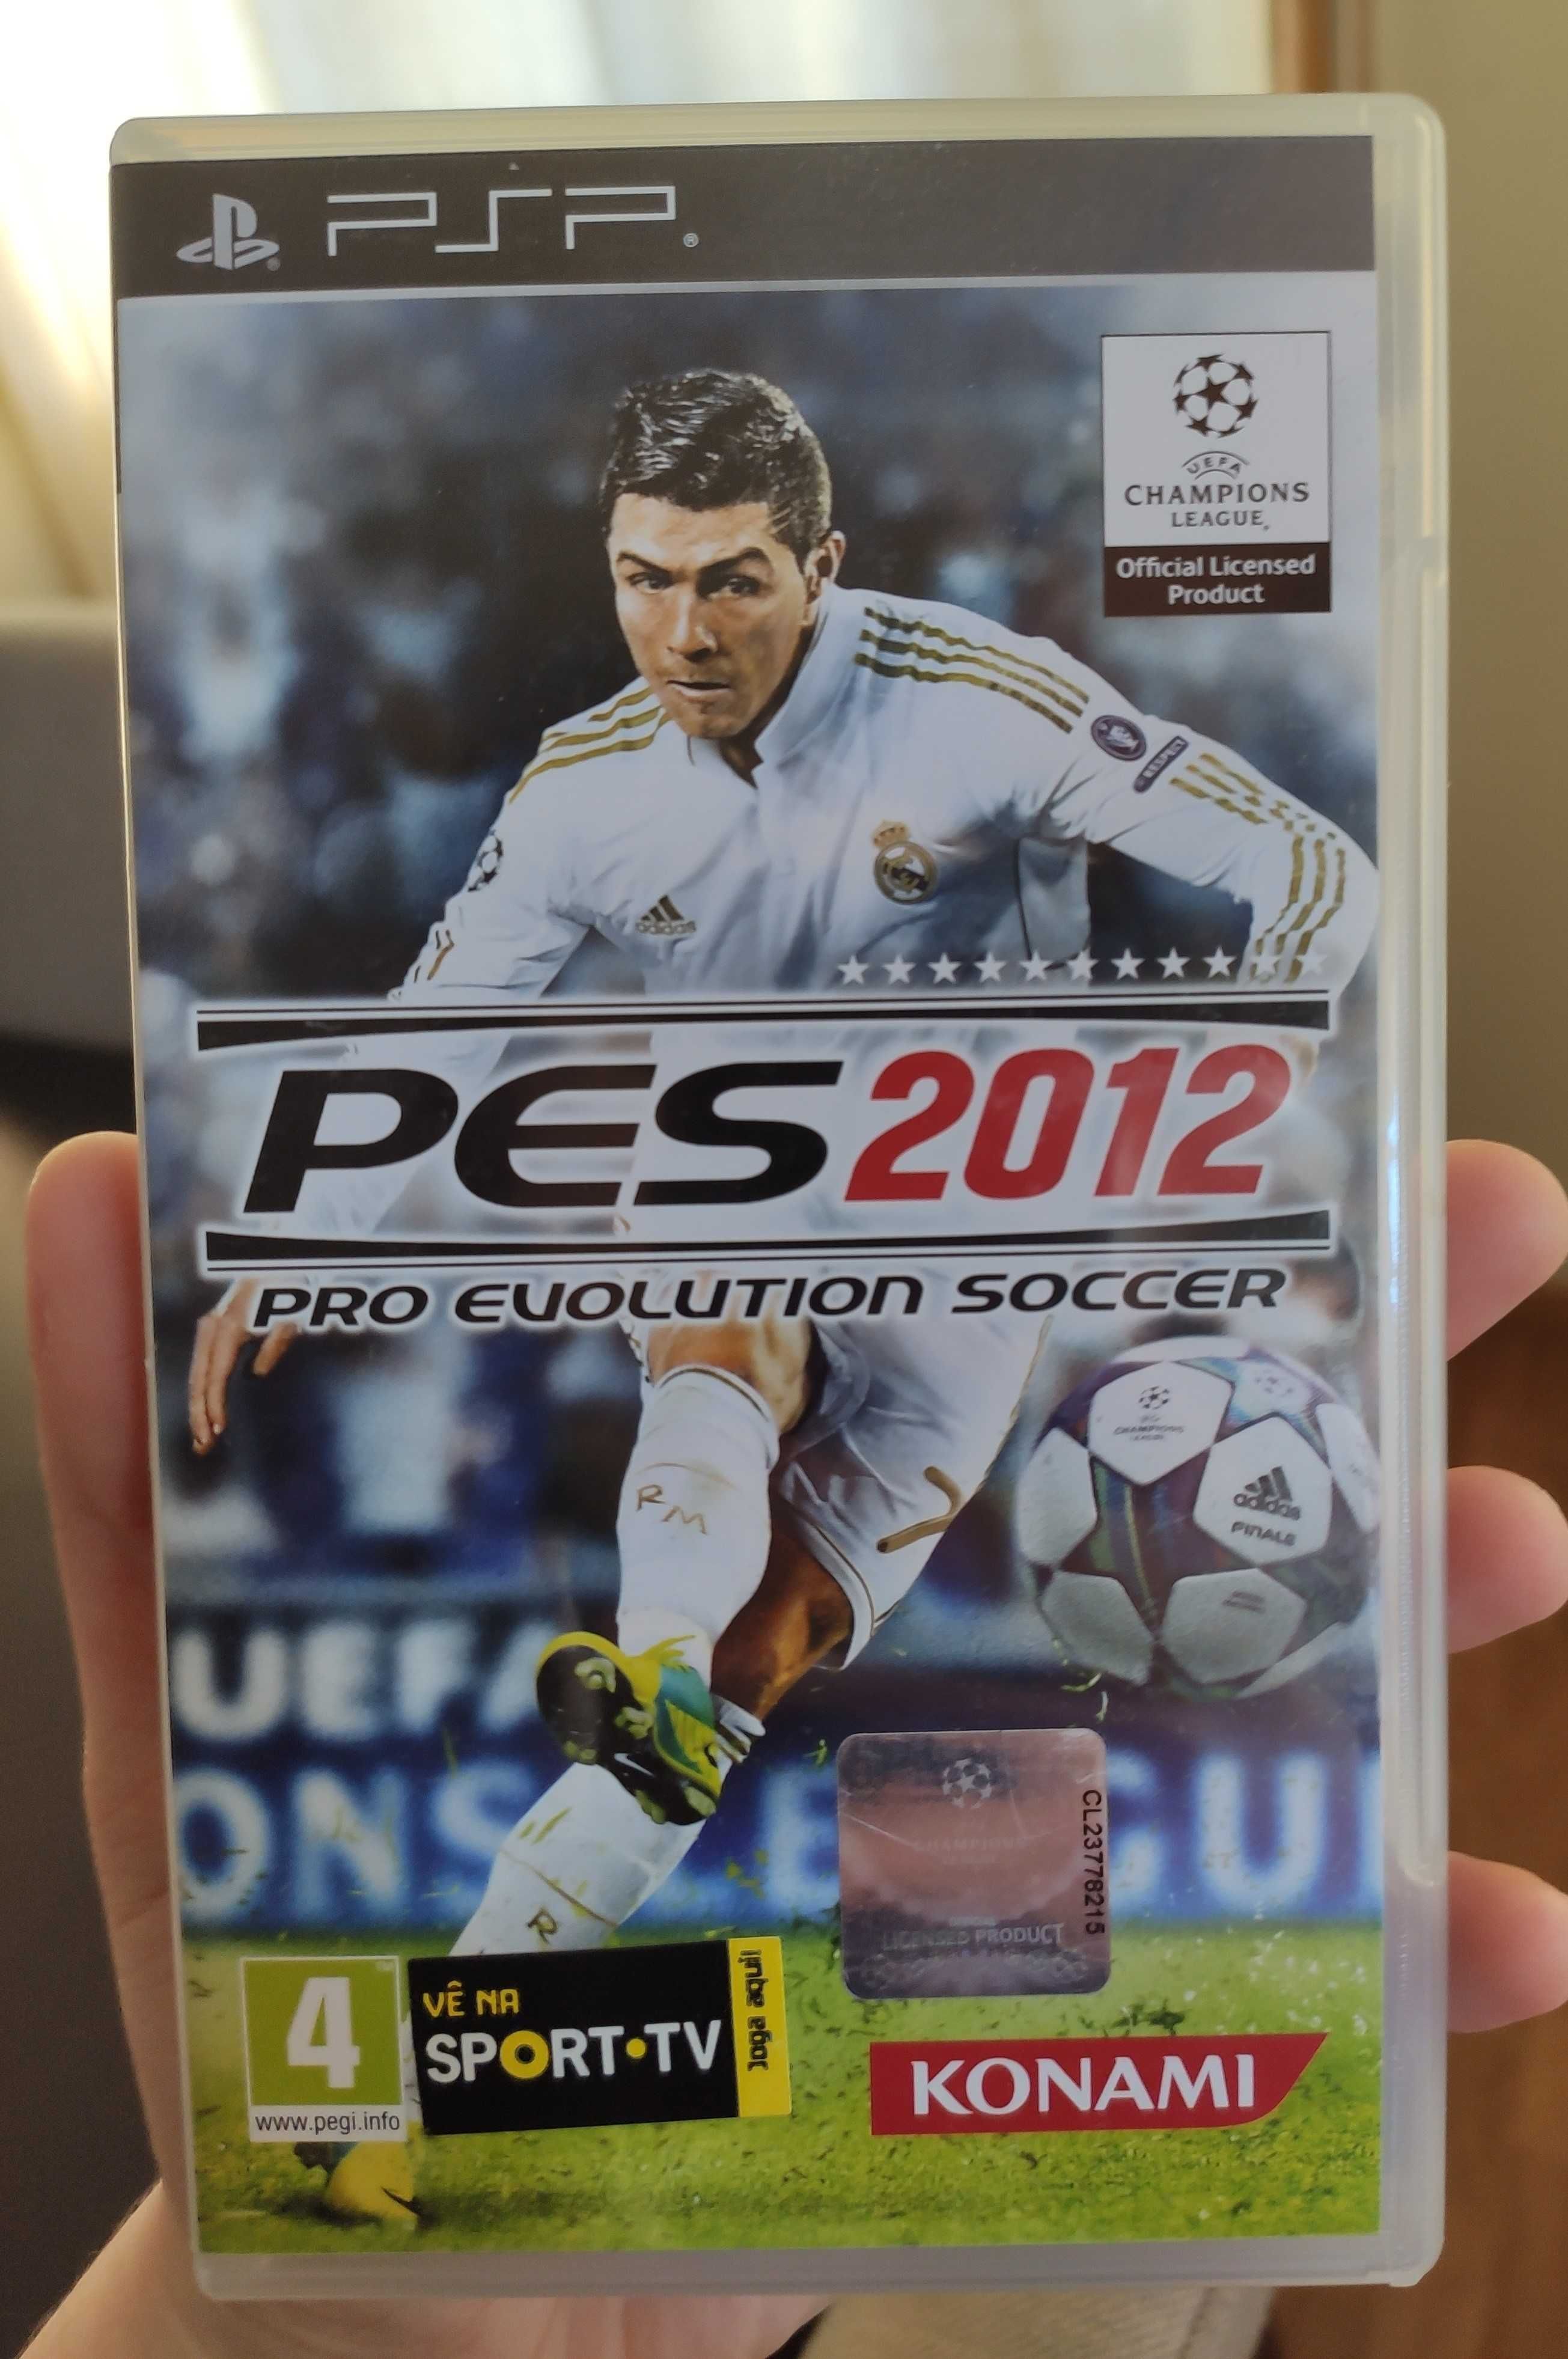 Pro Evolution Soccer (PES) 2012 PSP Valongo • OLX Portugal